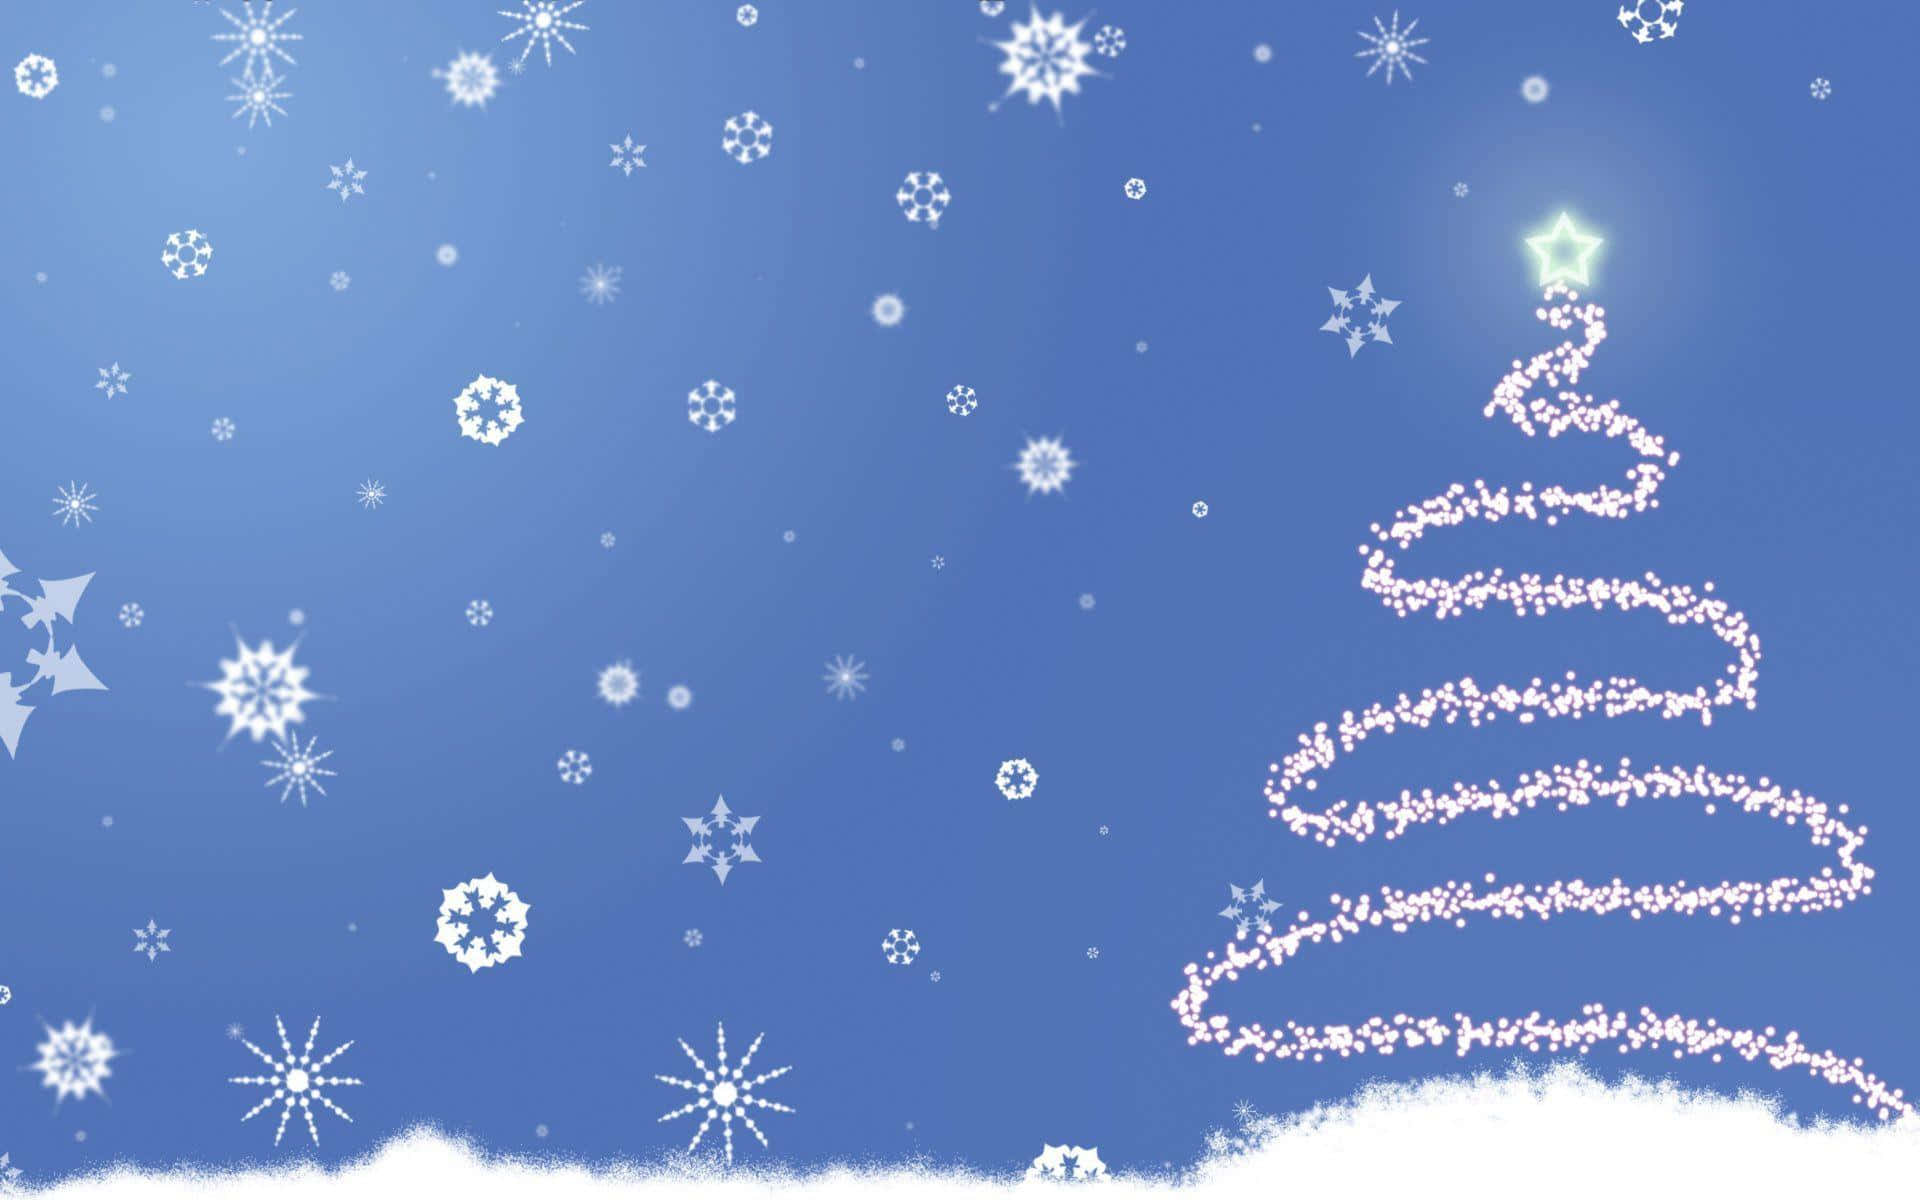 Teams Christmas Background Snowflakes Falling